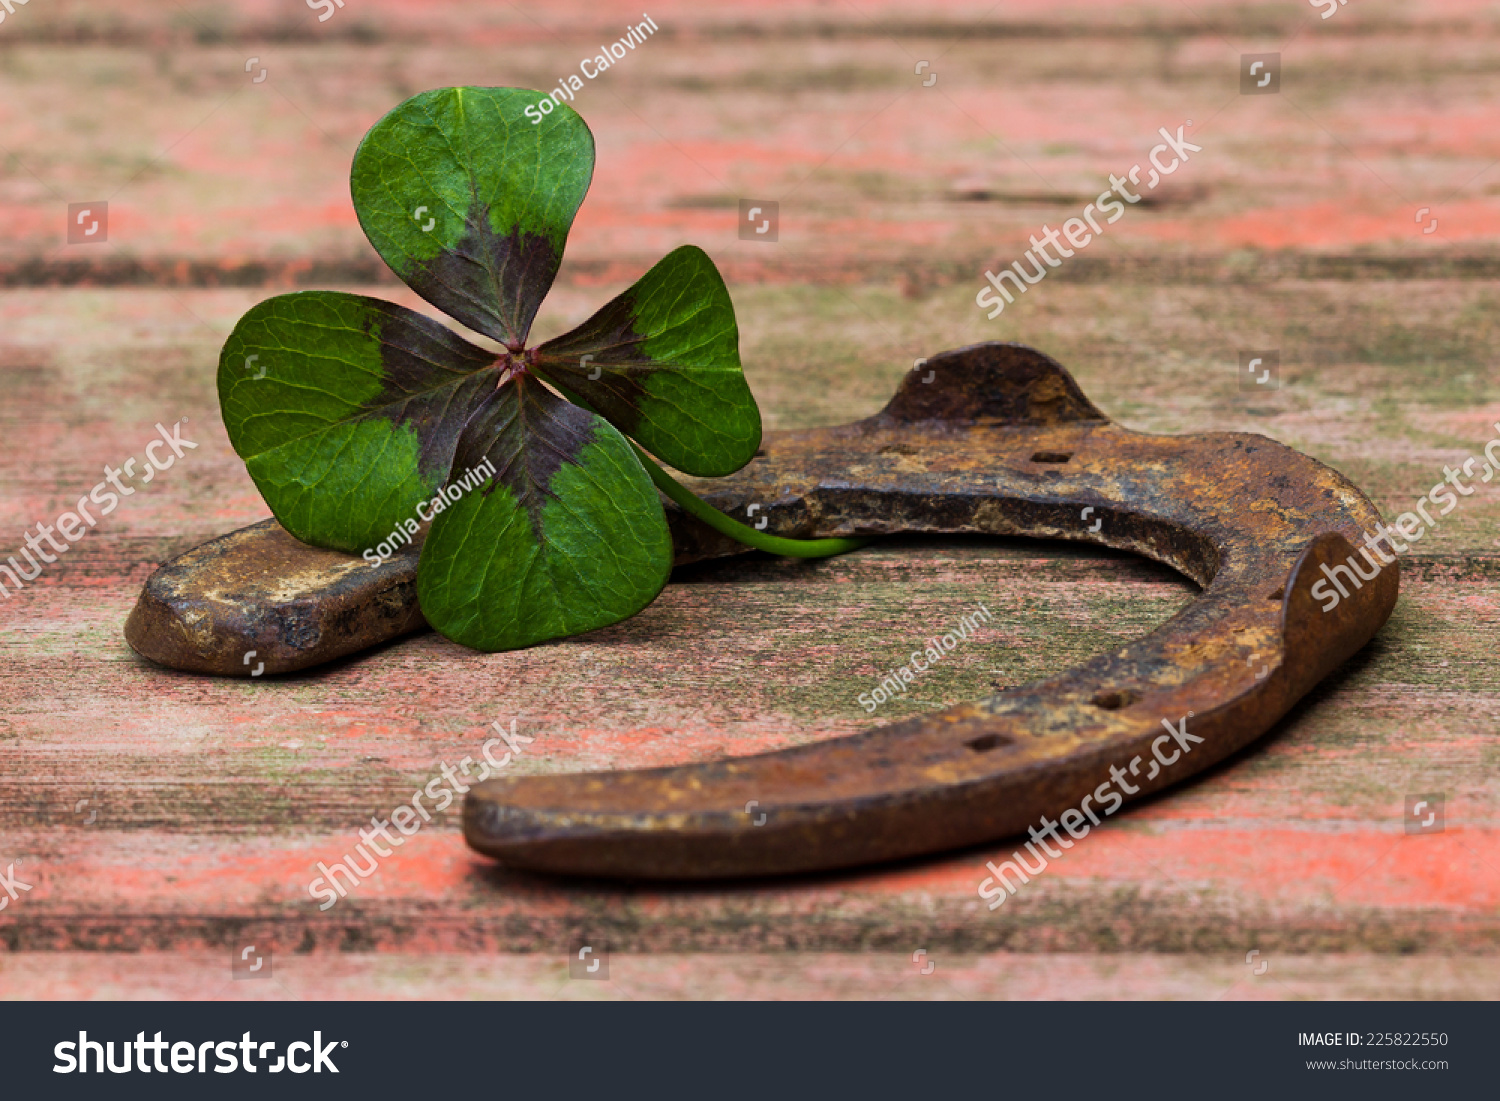 horseshoe and four leaf clover on wood #225822550